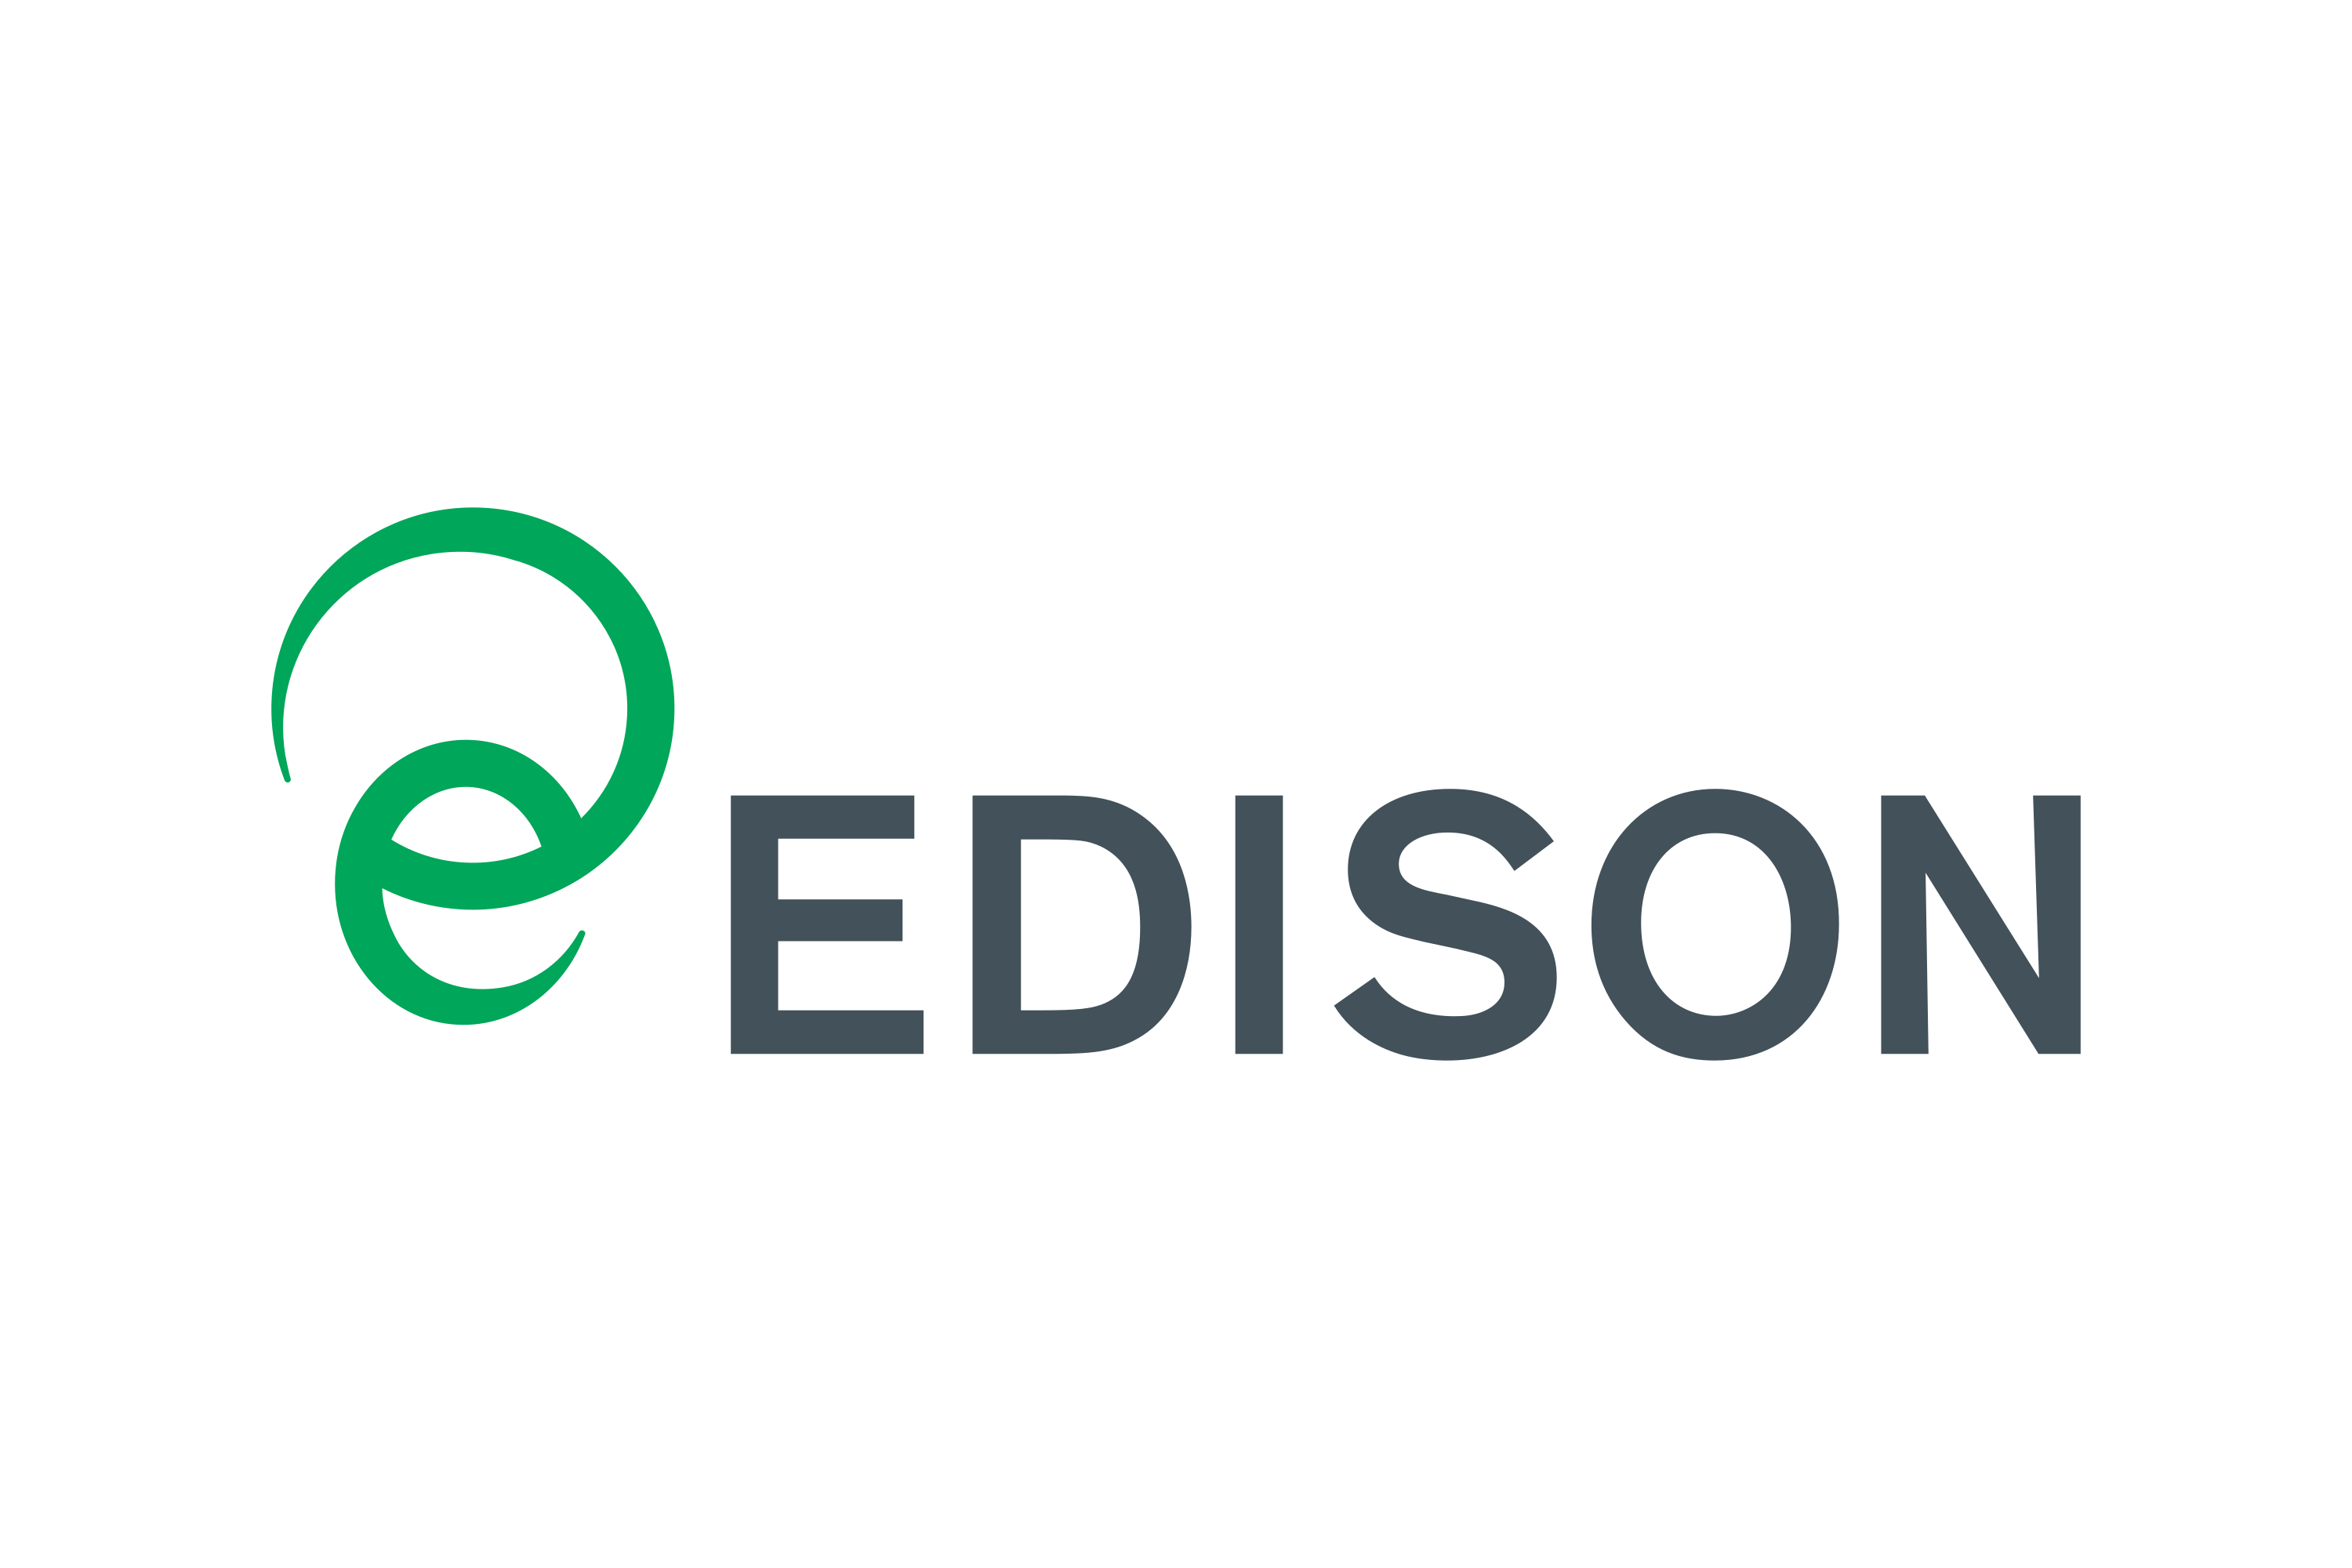 Download Edison Logo in SVG Vector or PNG File Format - Logo.wine